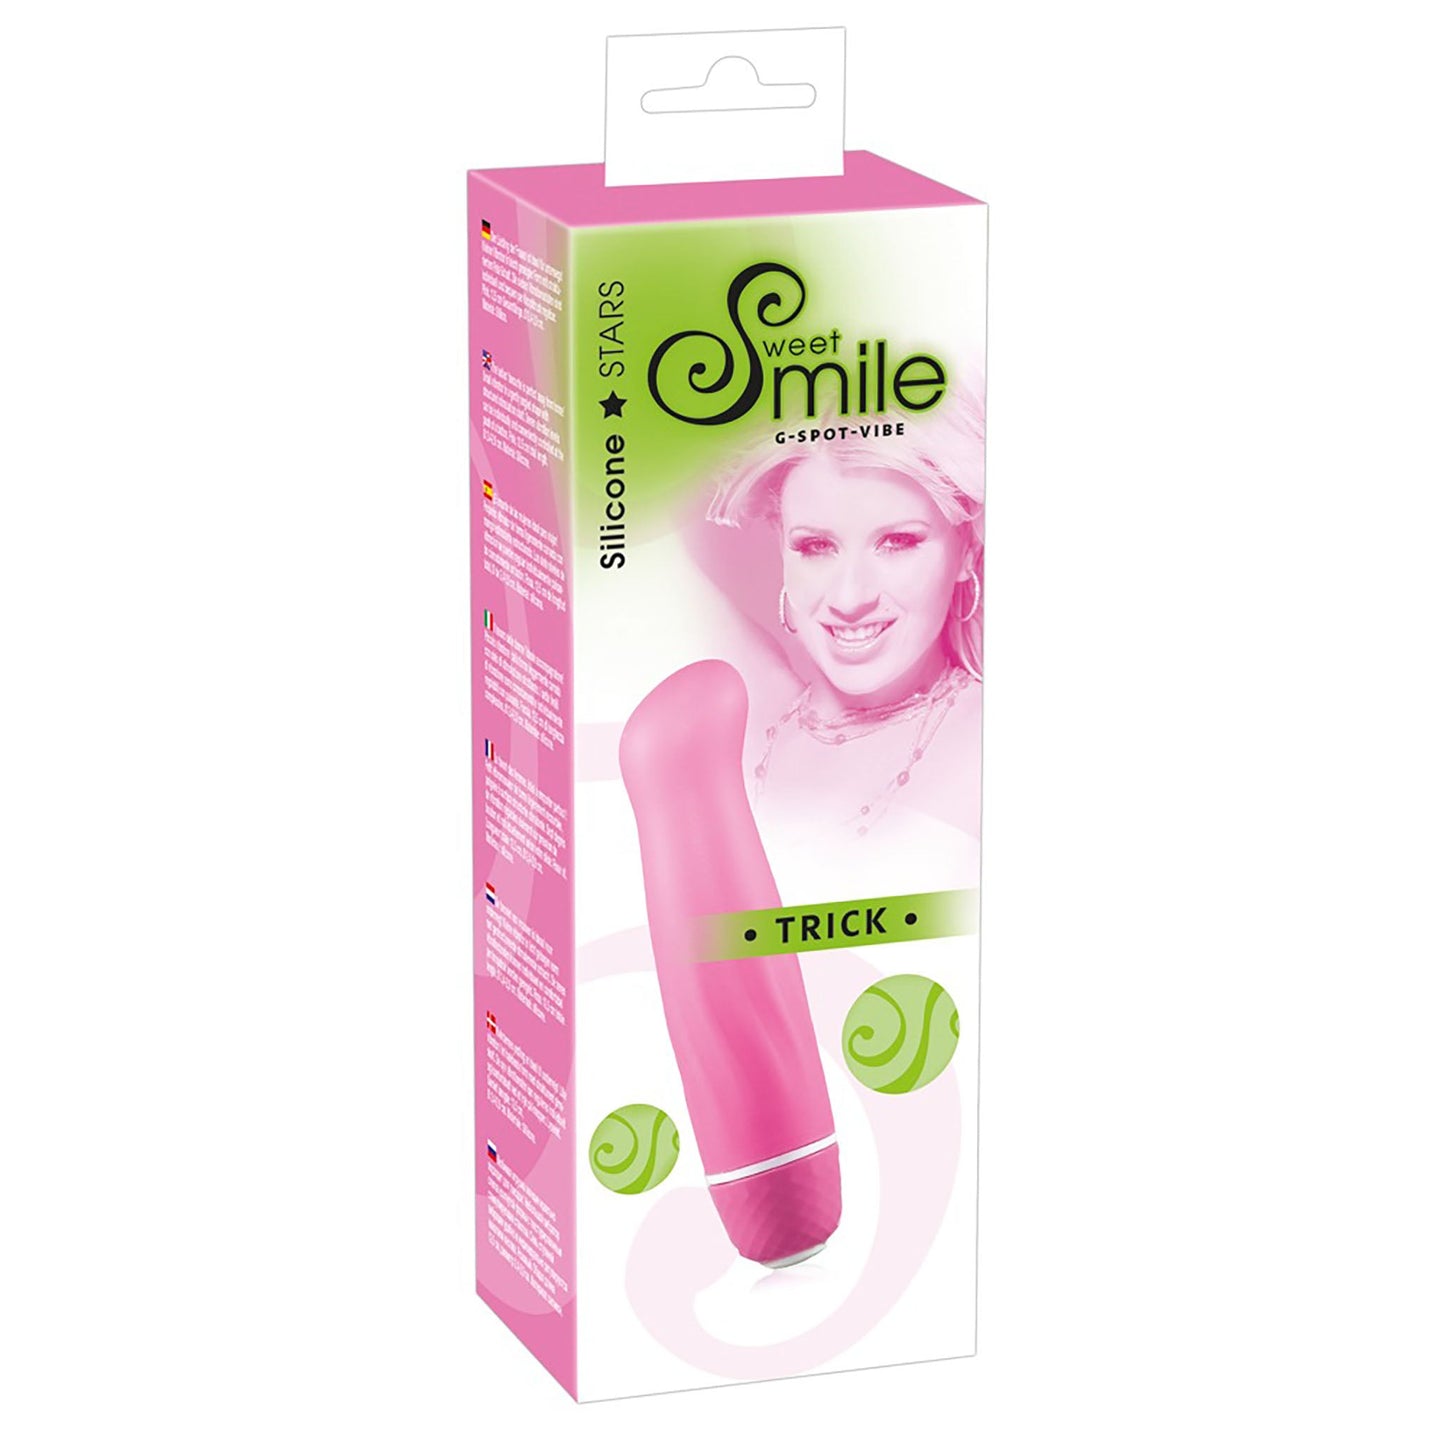 Smile Trick von Sweet Smile, Mini Vibrator in Pink in Verpackung